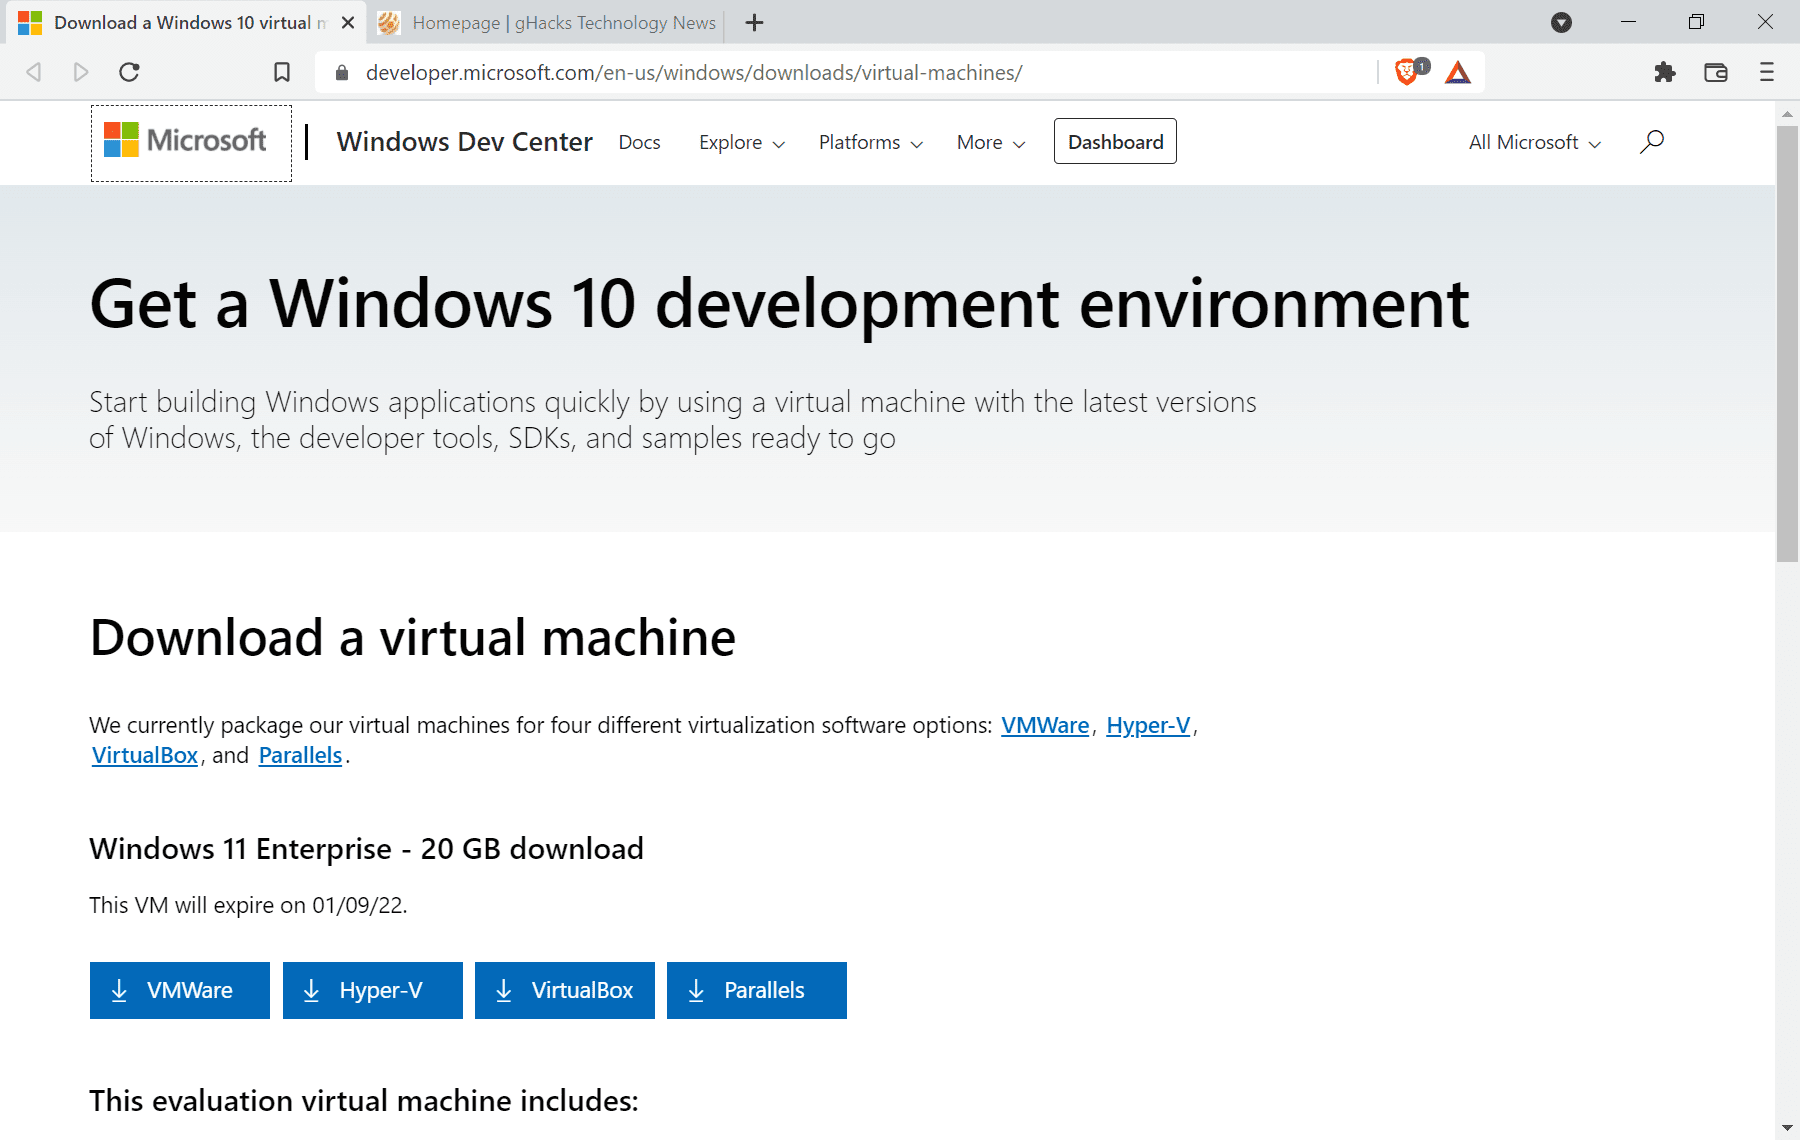 windows 11 enterprise virtual machine image